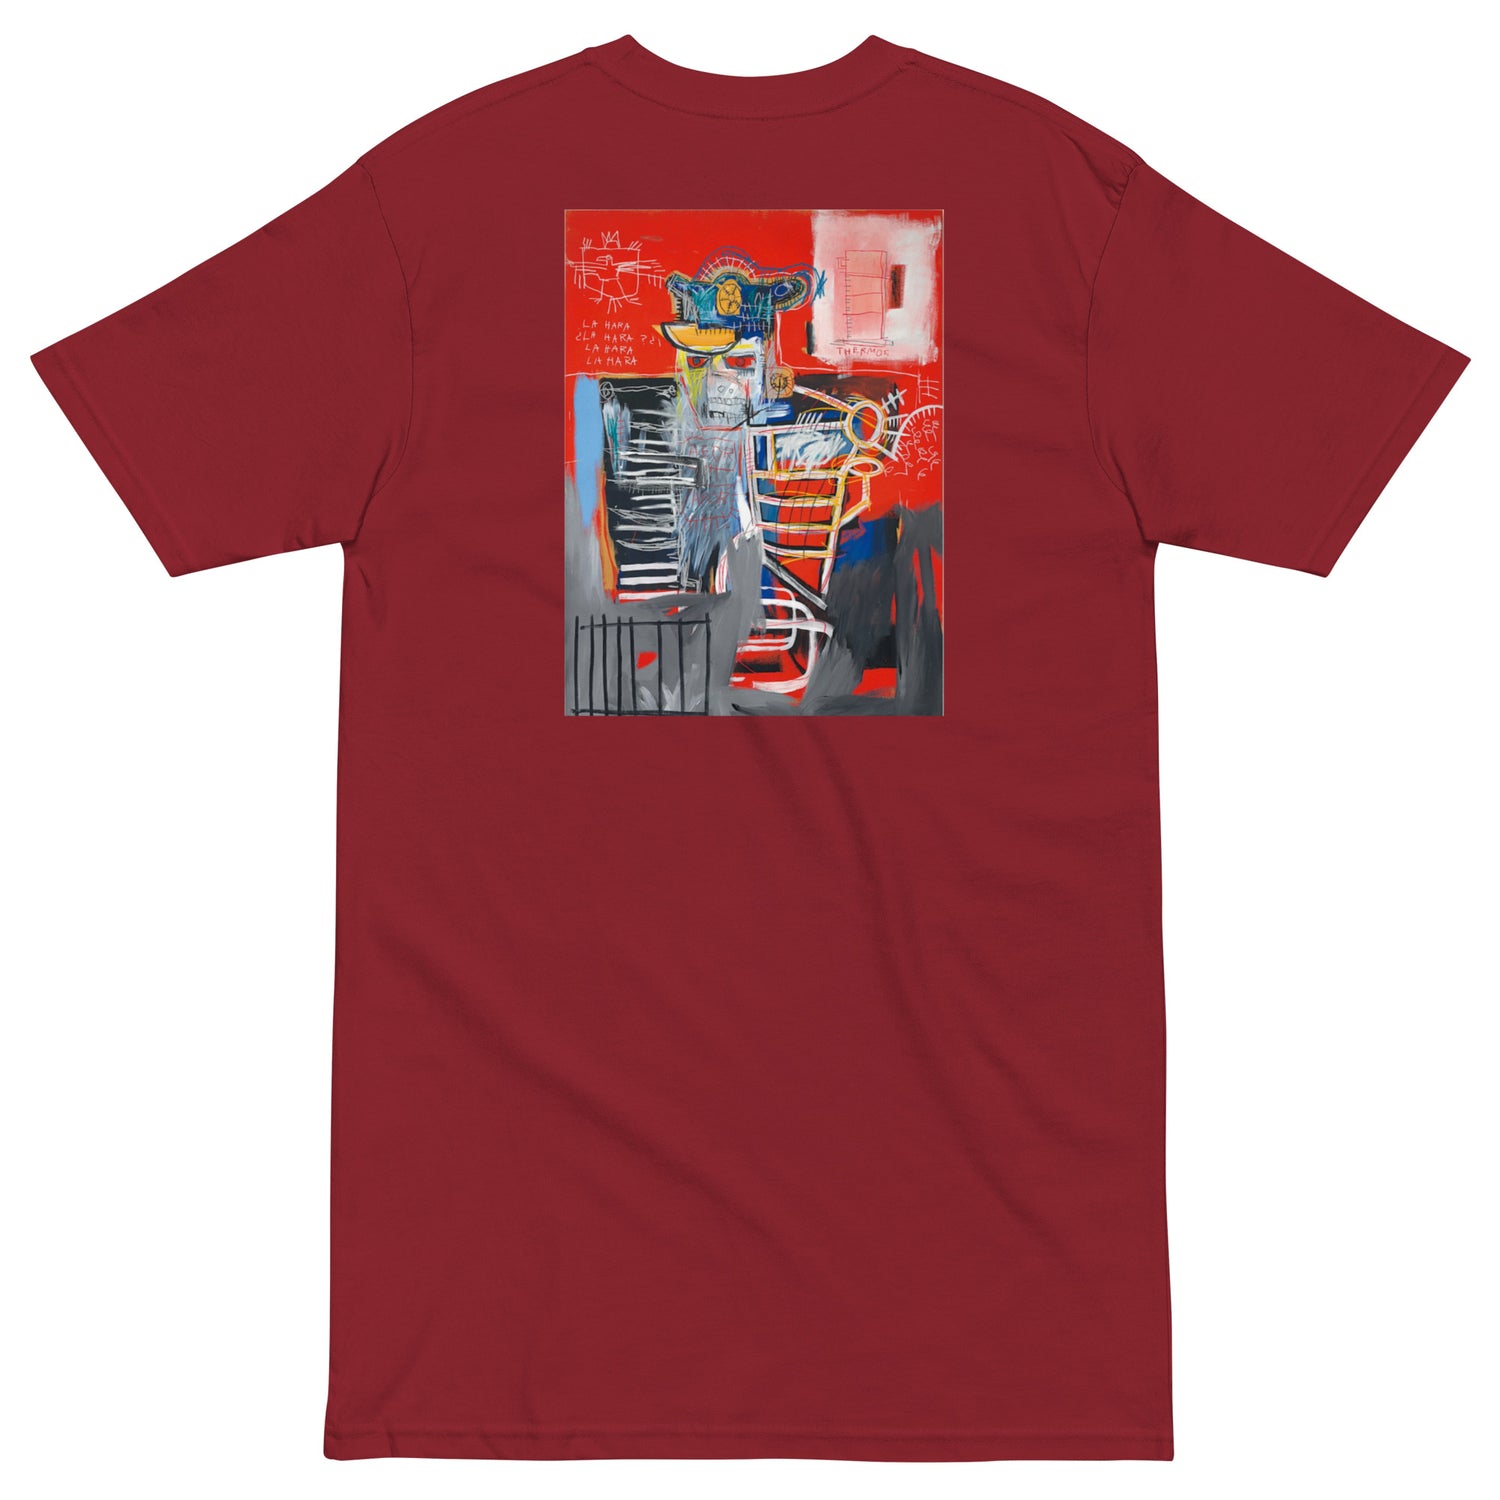 Jean-Michel Basquiat "La Hara" 1981 Artwork Embroidered + Printed Premium Streetwear Red T-shirt